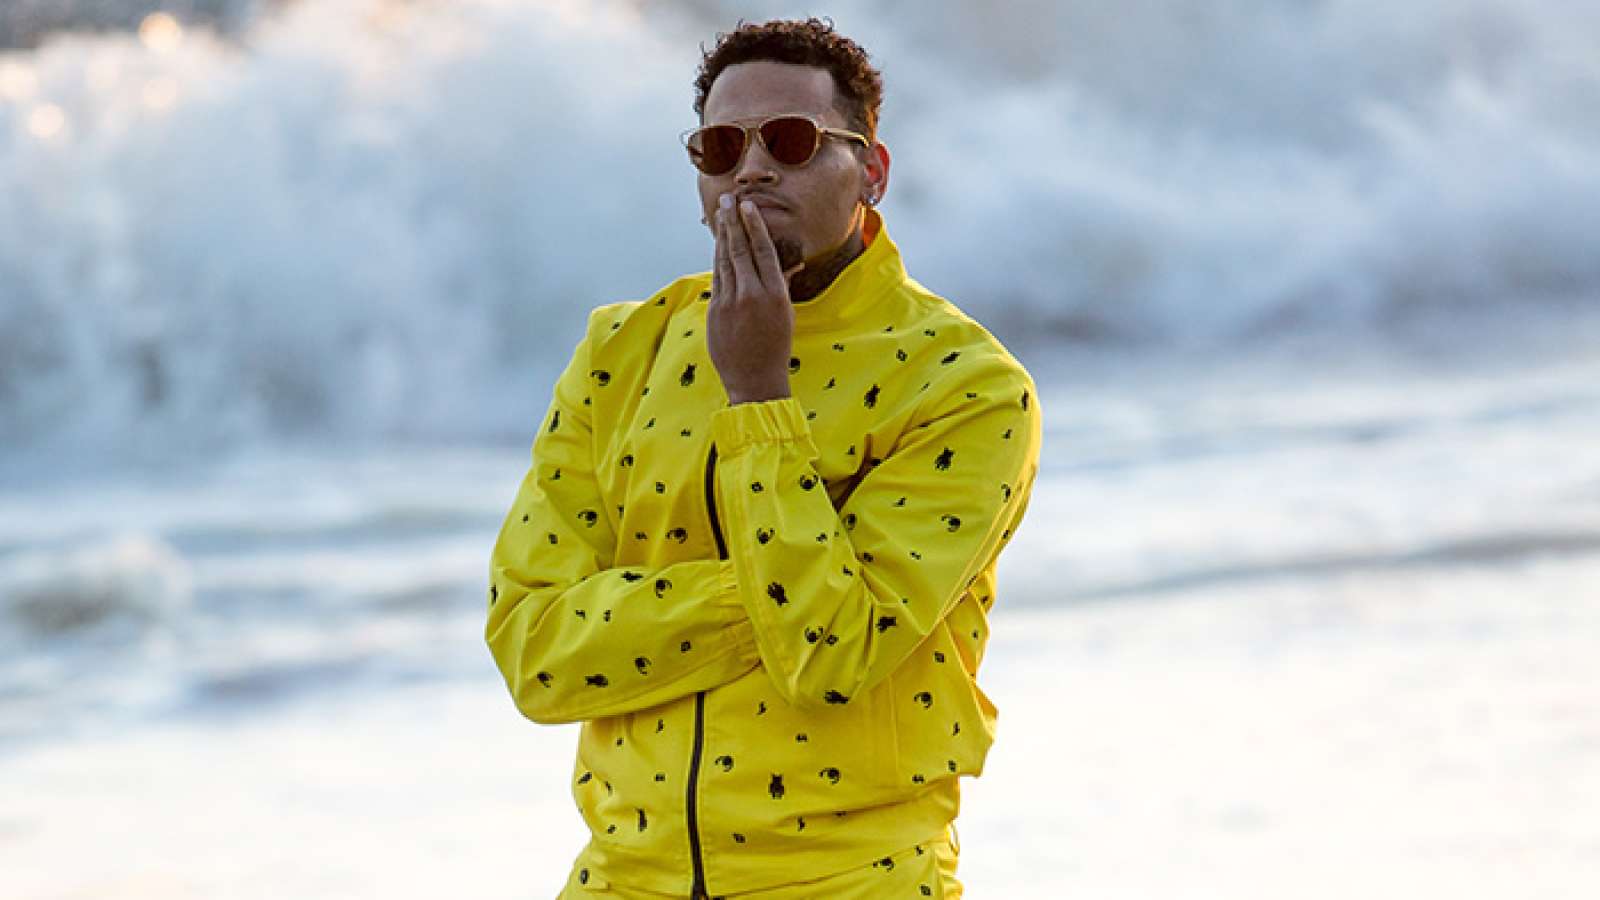 Chris Brown: Singer addresses drug addiction reports